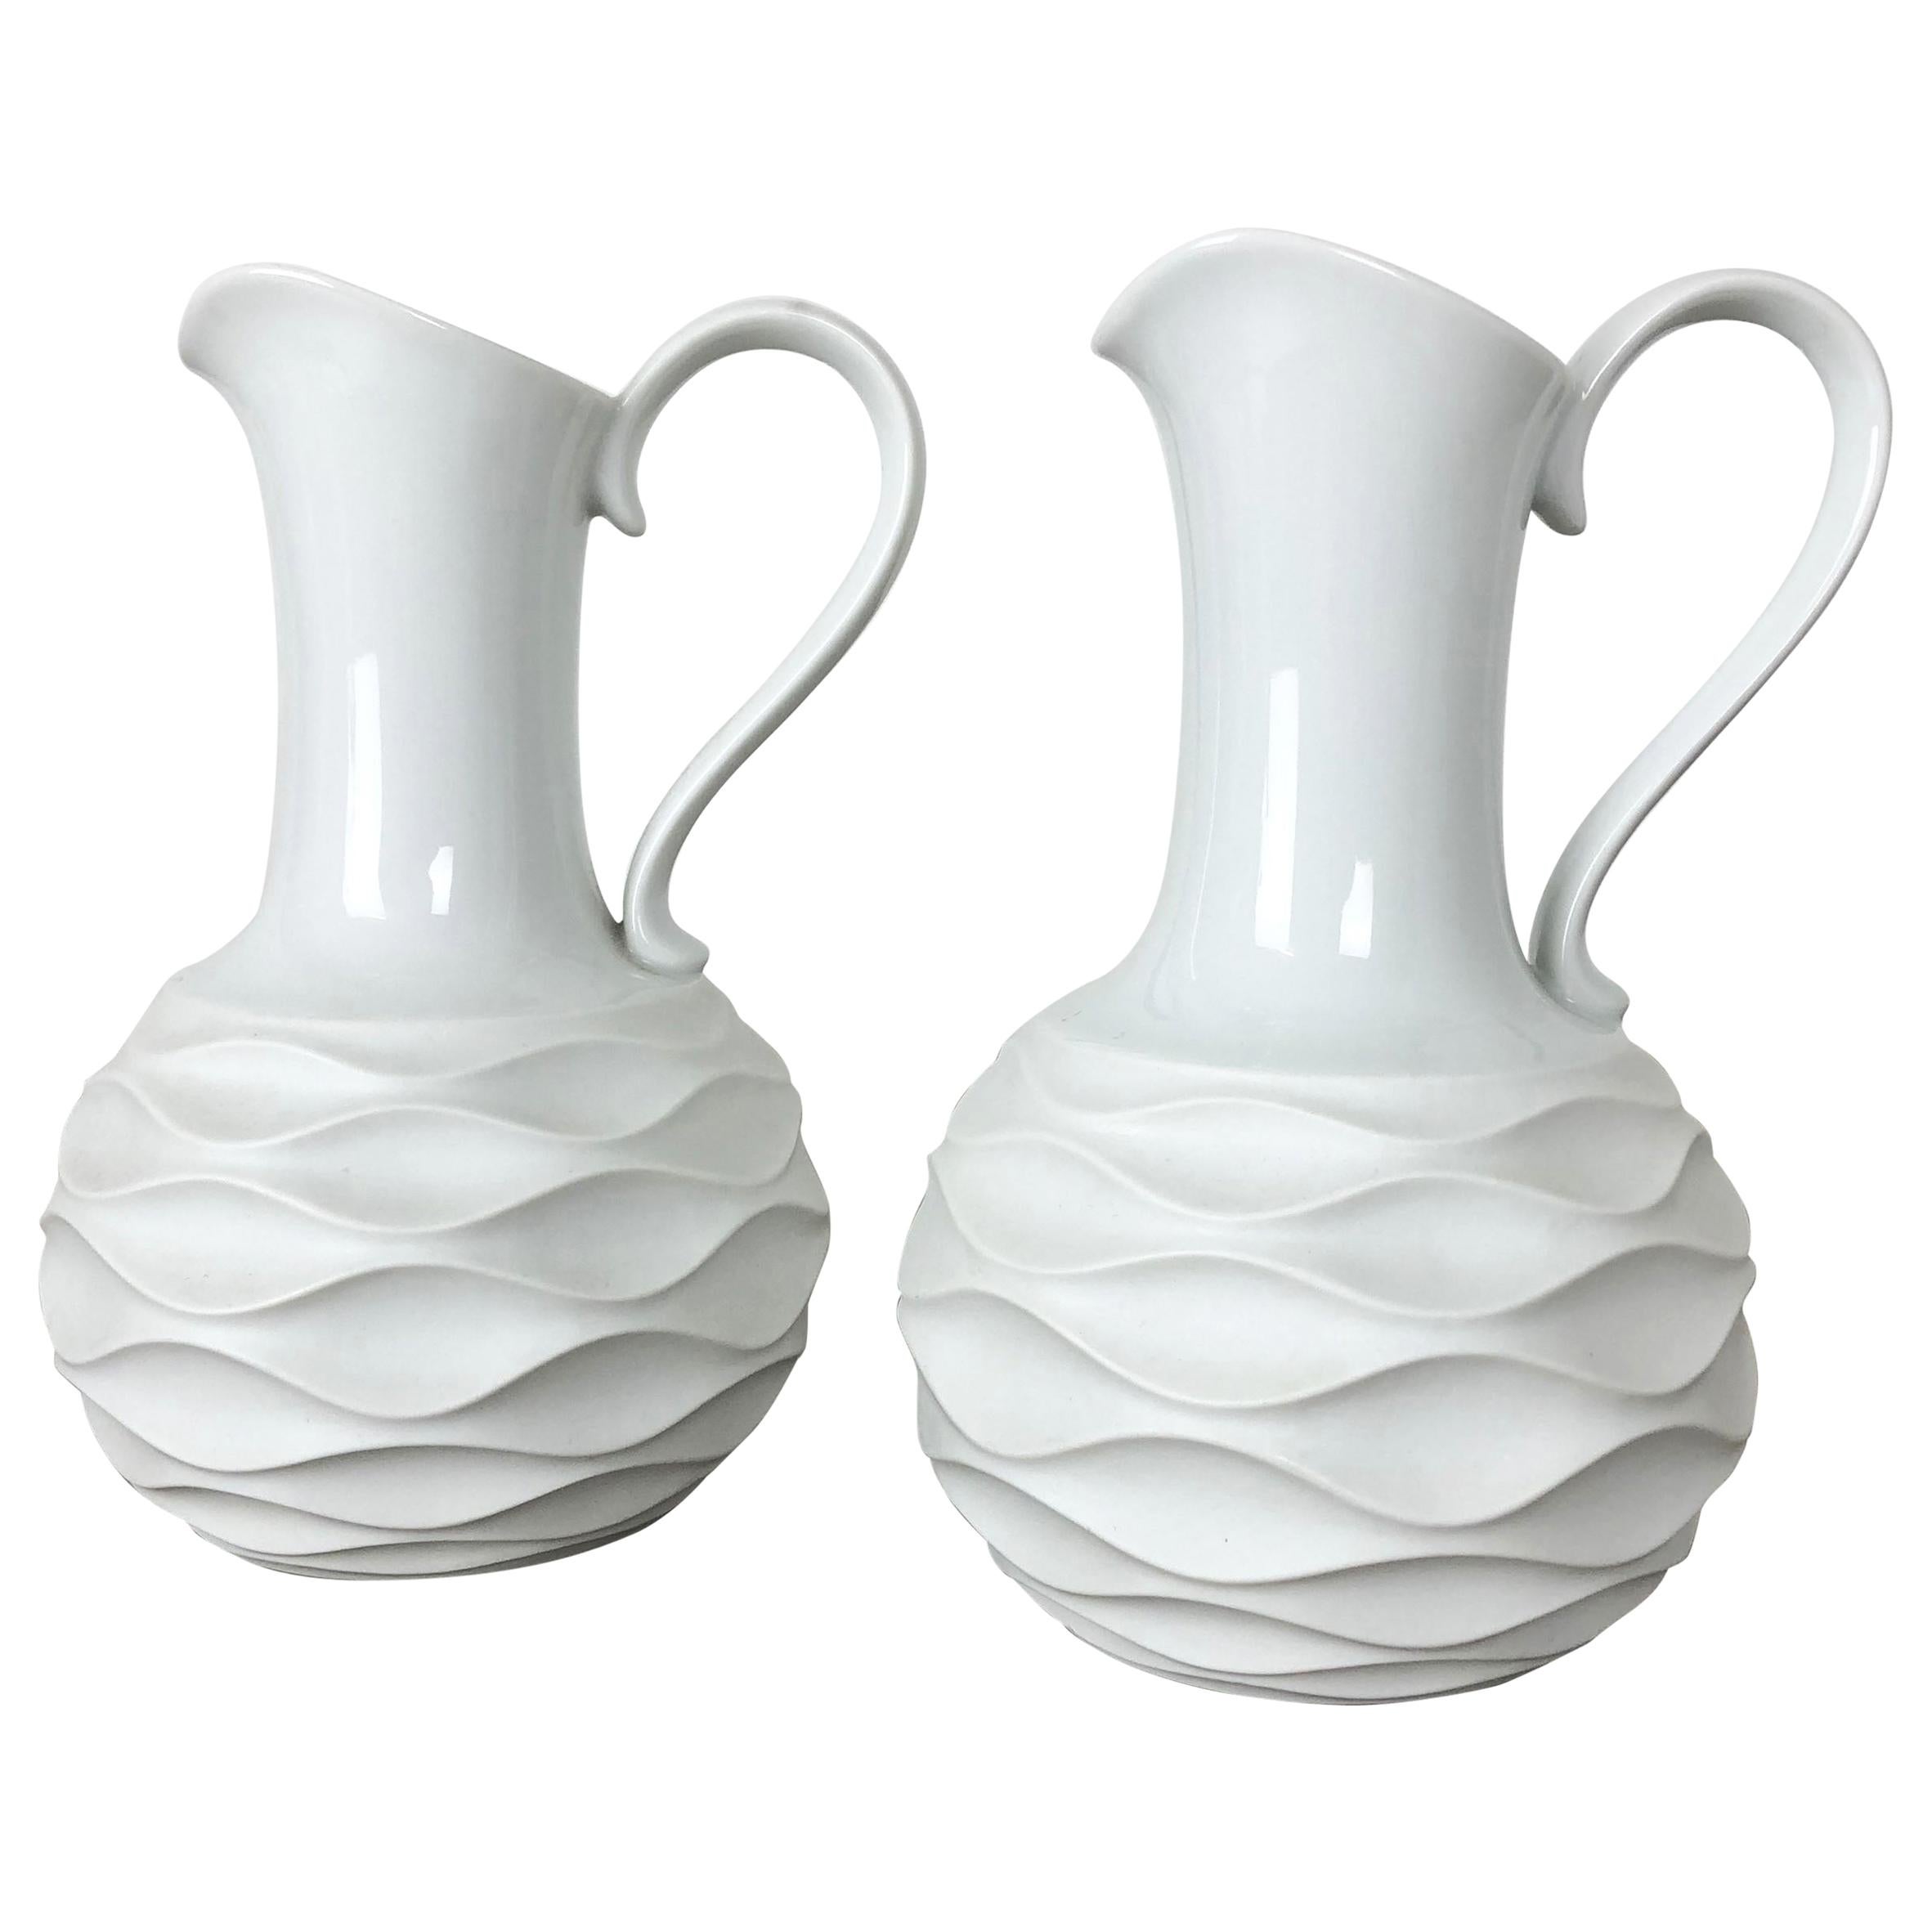 Set of 2 OP Art Biscuit Porcelain Jug Vases by Edelstein Bavaria, Germany, 1970s